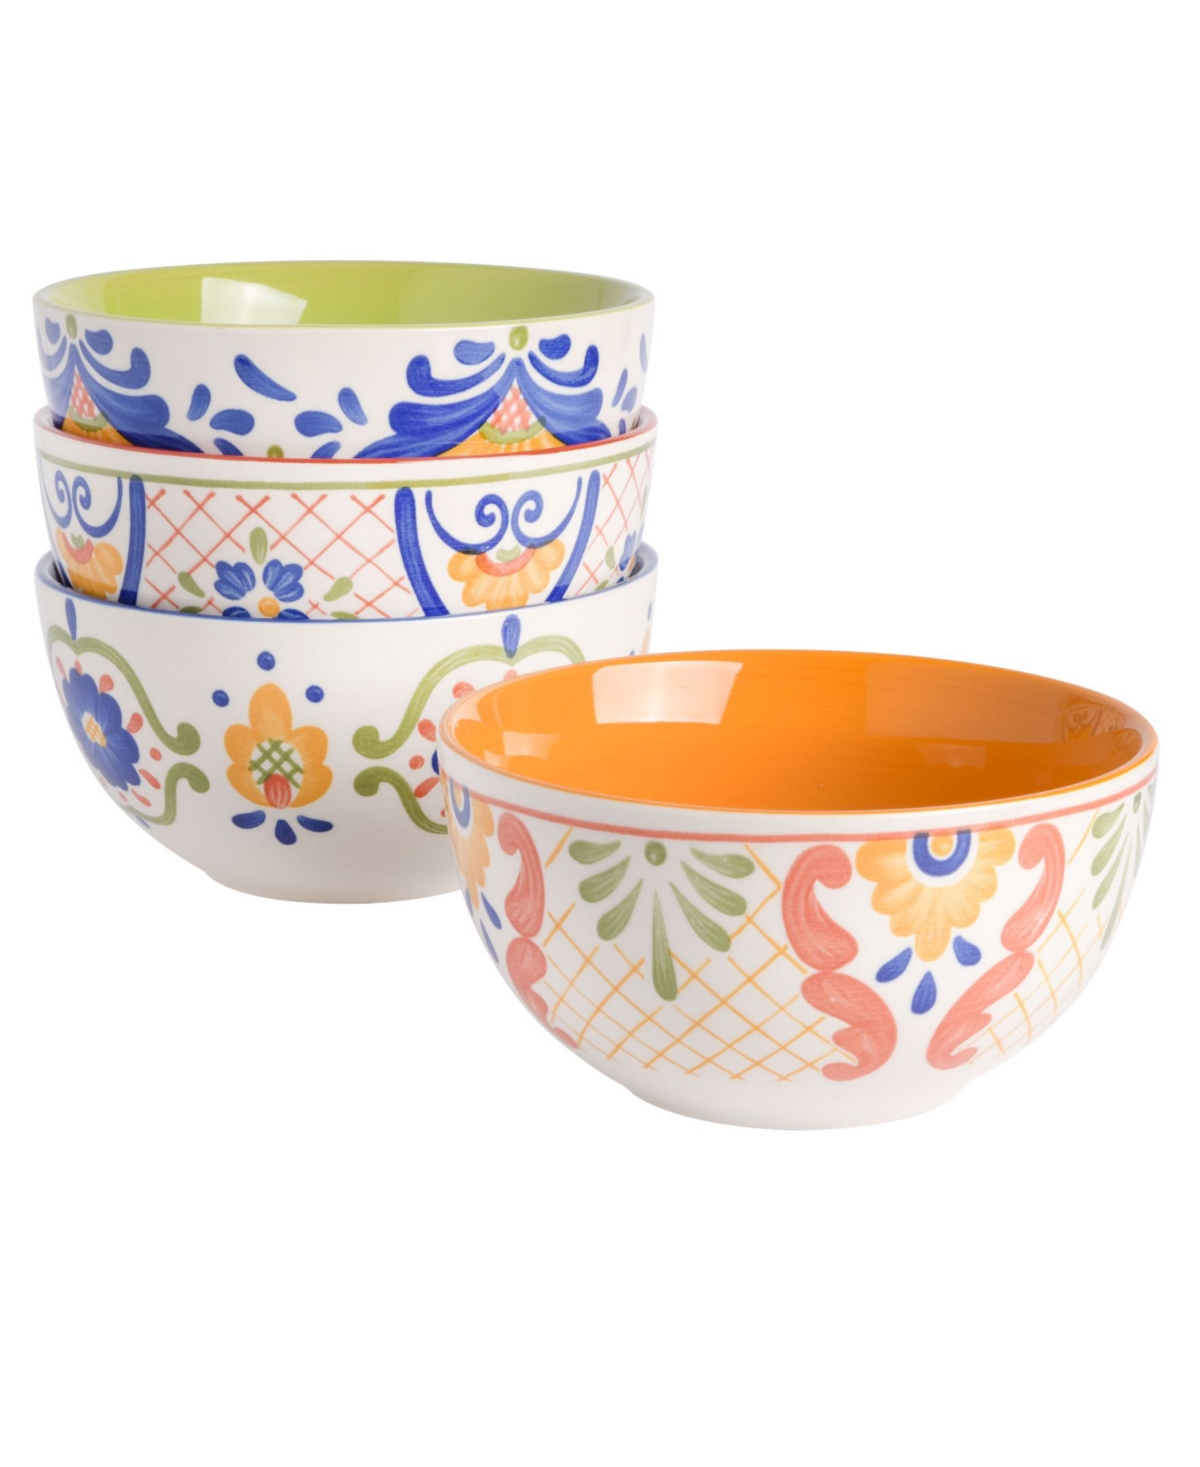 Tierra Tile Hand-Painted 4 Piece Bowl Set - Multi-Colored